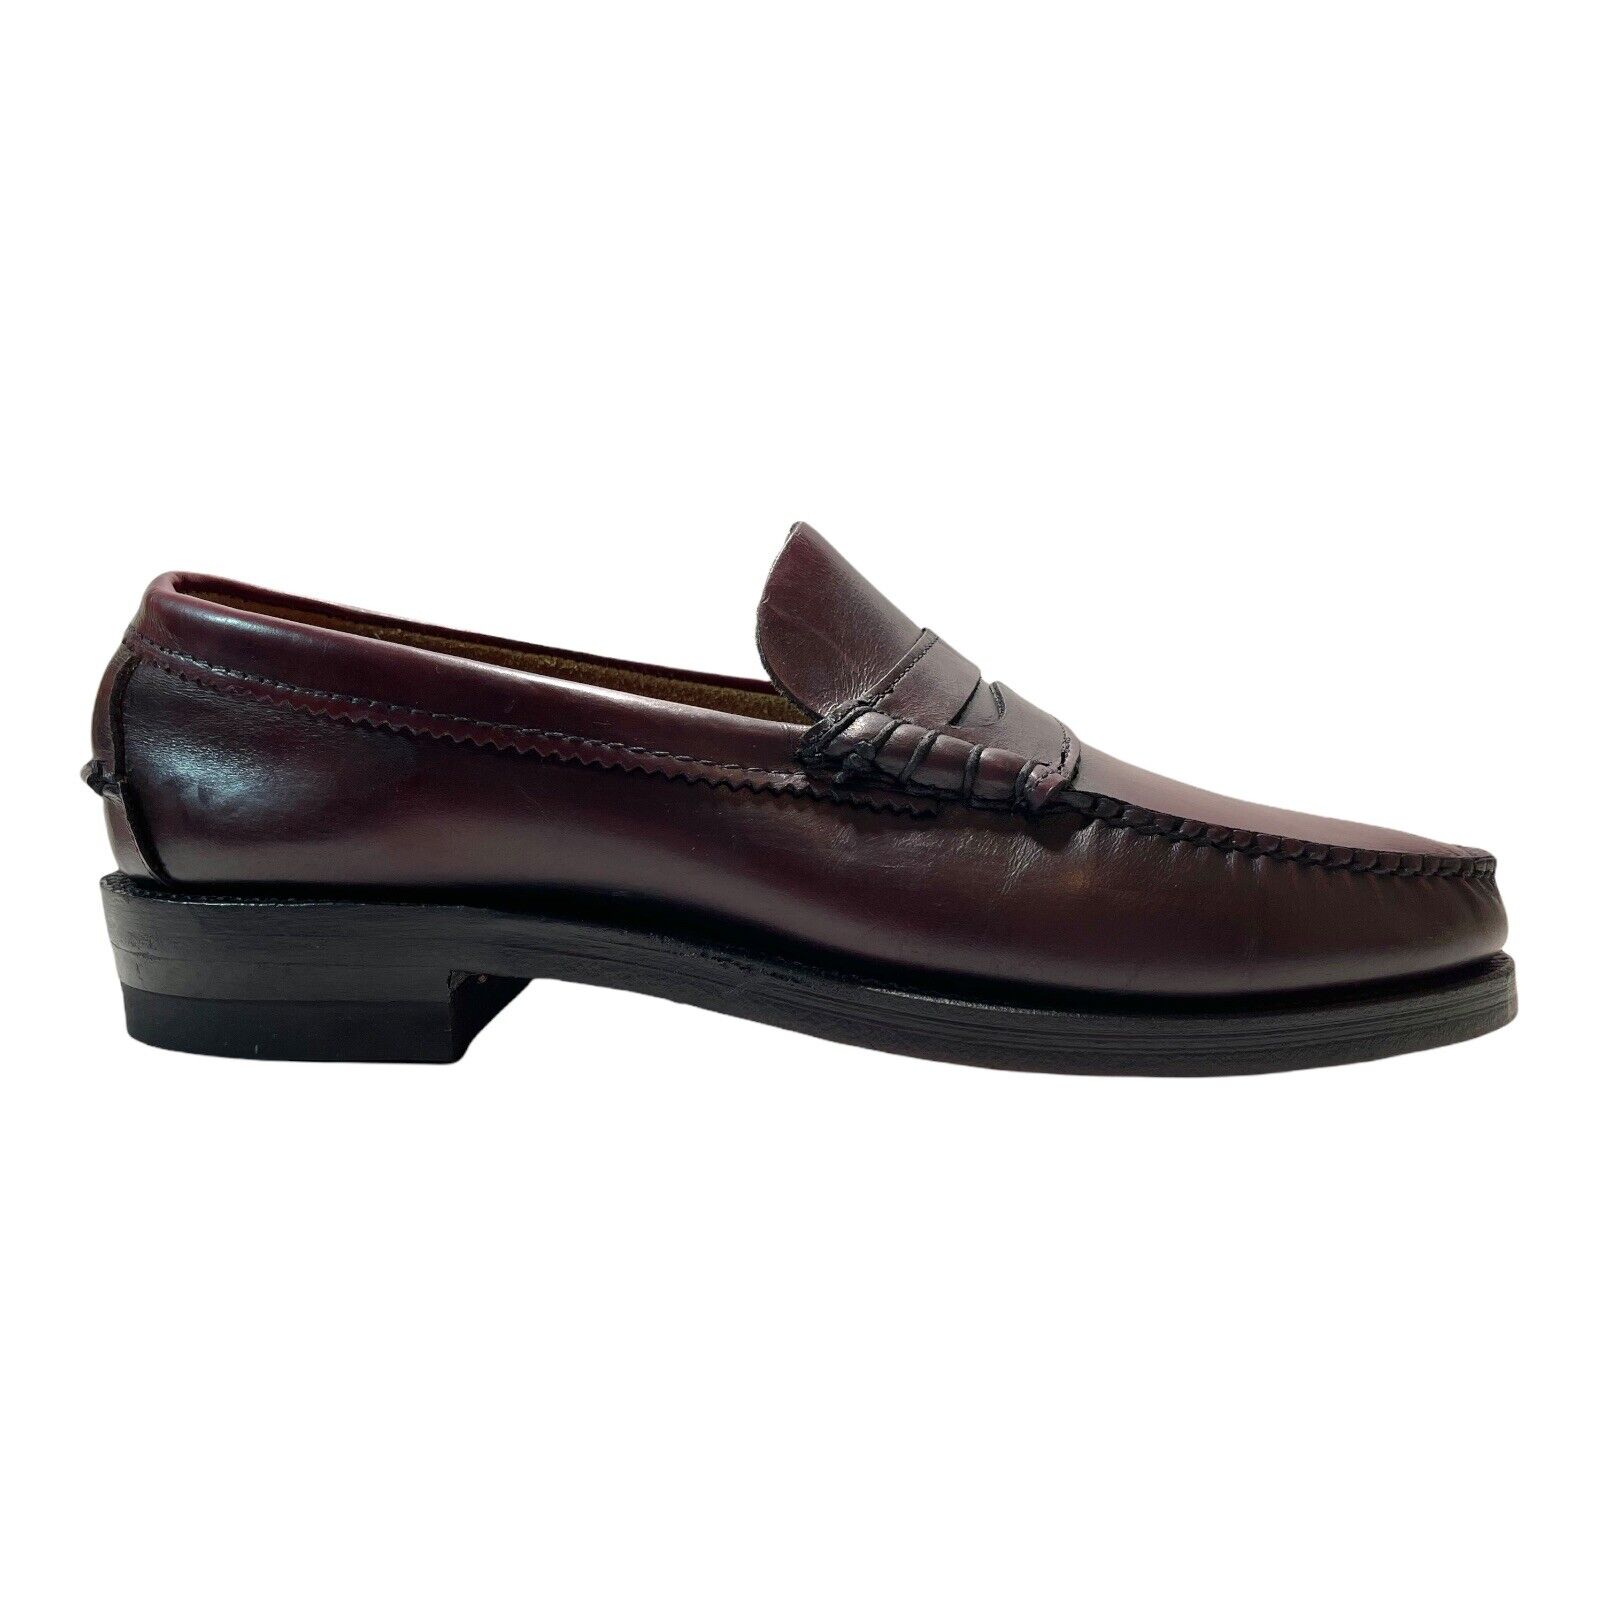 Surprise price L.L. Bean Men’s Rapid rise Shoes Burgundy B 10 Loafers Leather Size